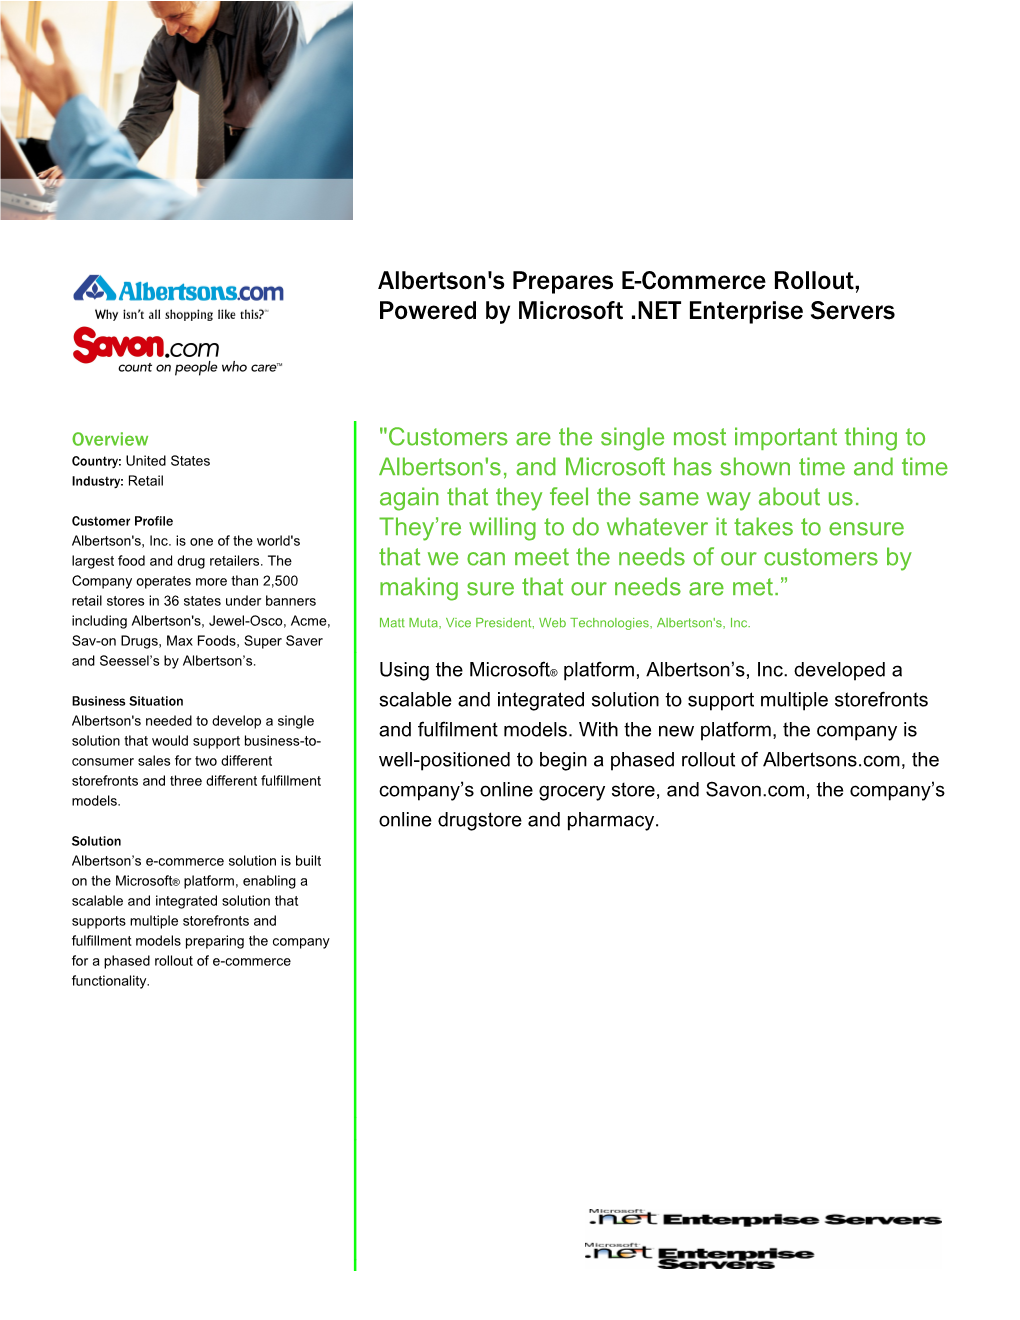 Albertson's Prepares E-Commerce Rollout, Powered by Microsoft .NET Enterprise Servers